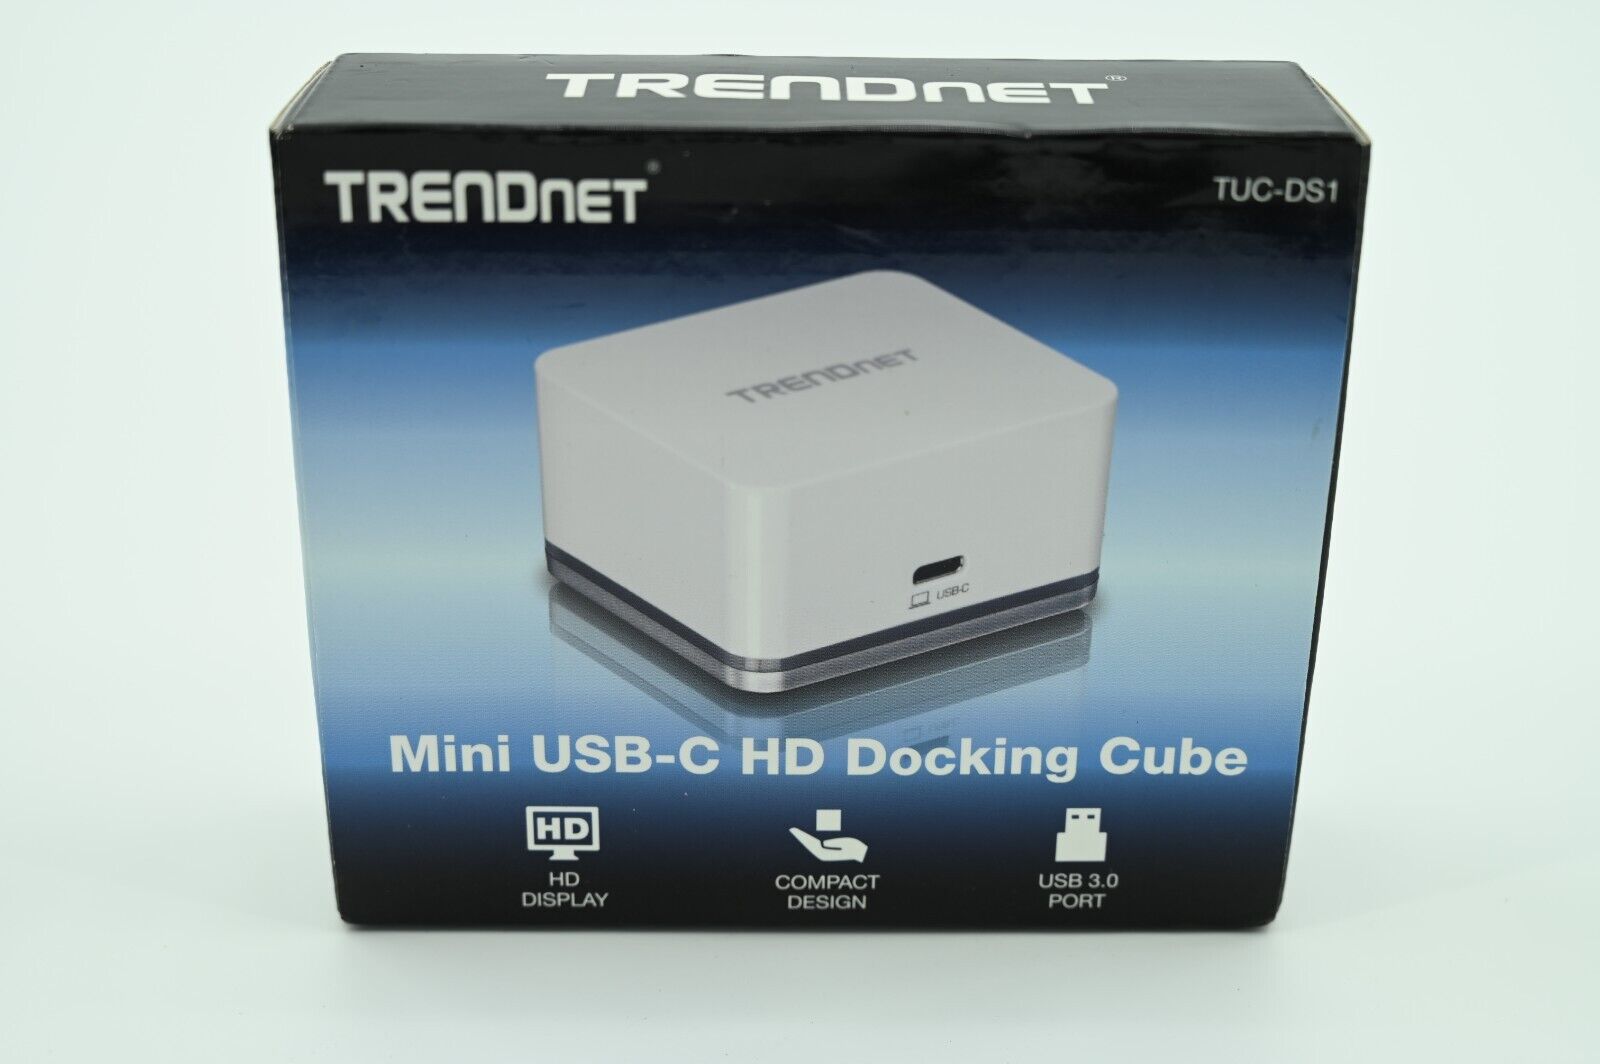 TRENDnet USB-C HD Docking Cube Model TUC-DS1 NEW in Box